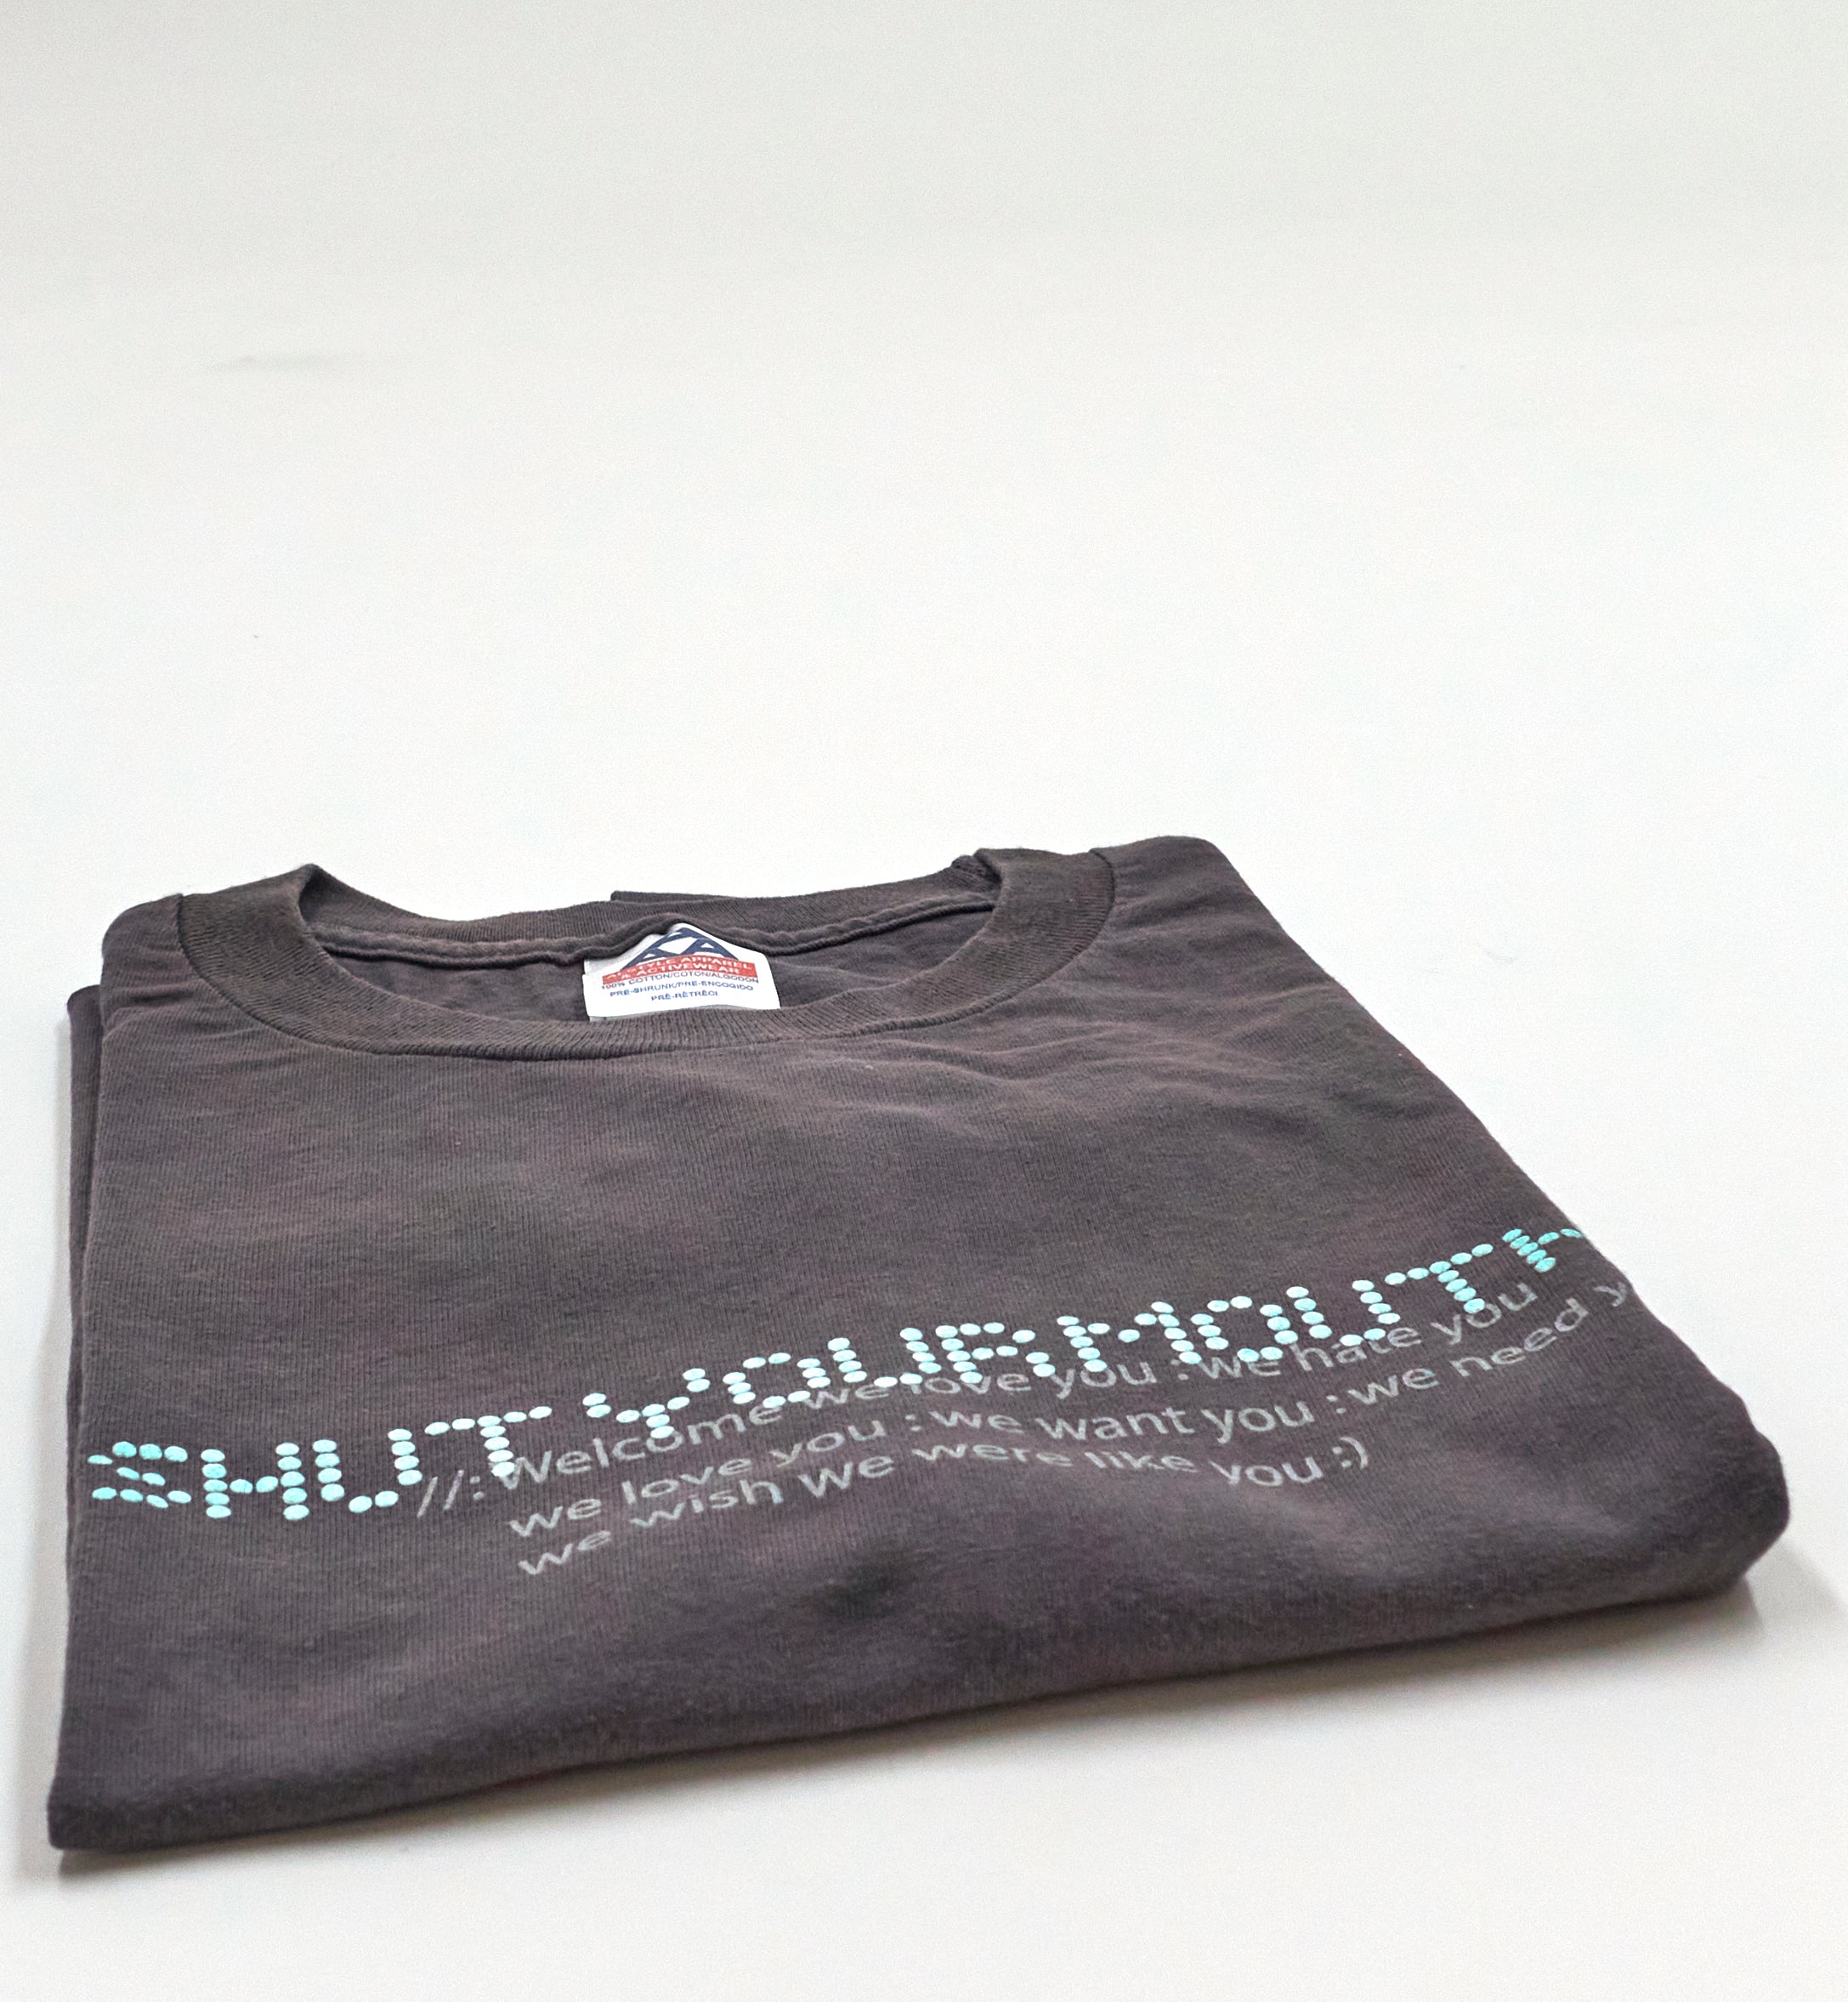 Garbage - Shut Your Mouth 2002 World Tour Shirt Size Large